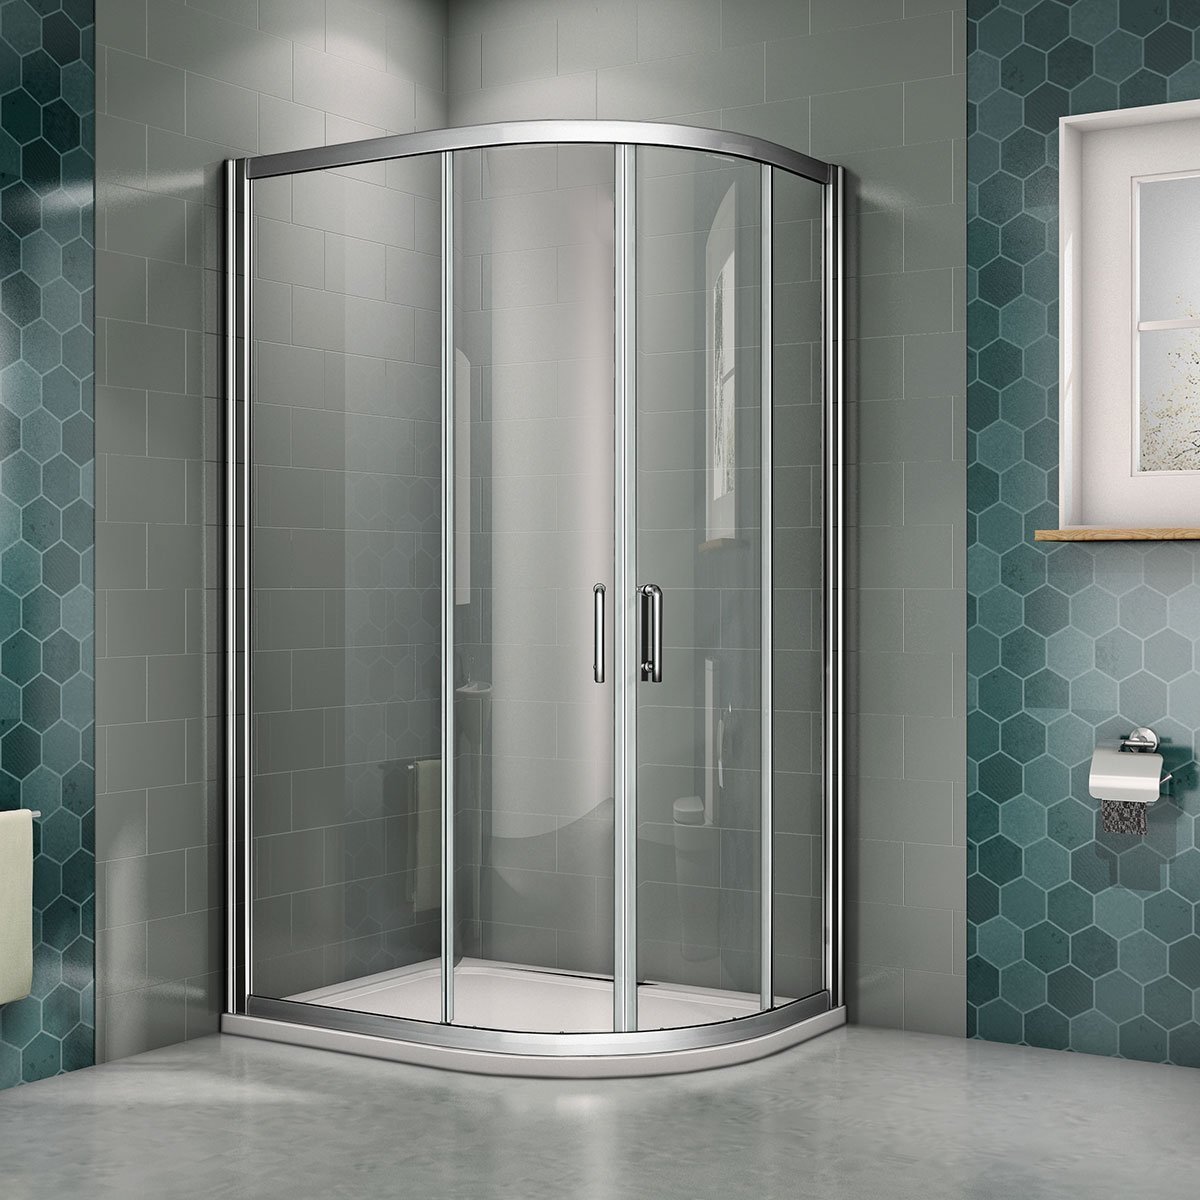 Quadrant Shower Enclosure frame double sliding door